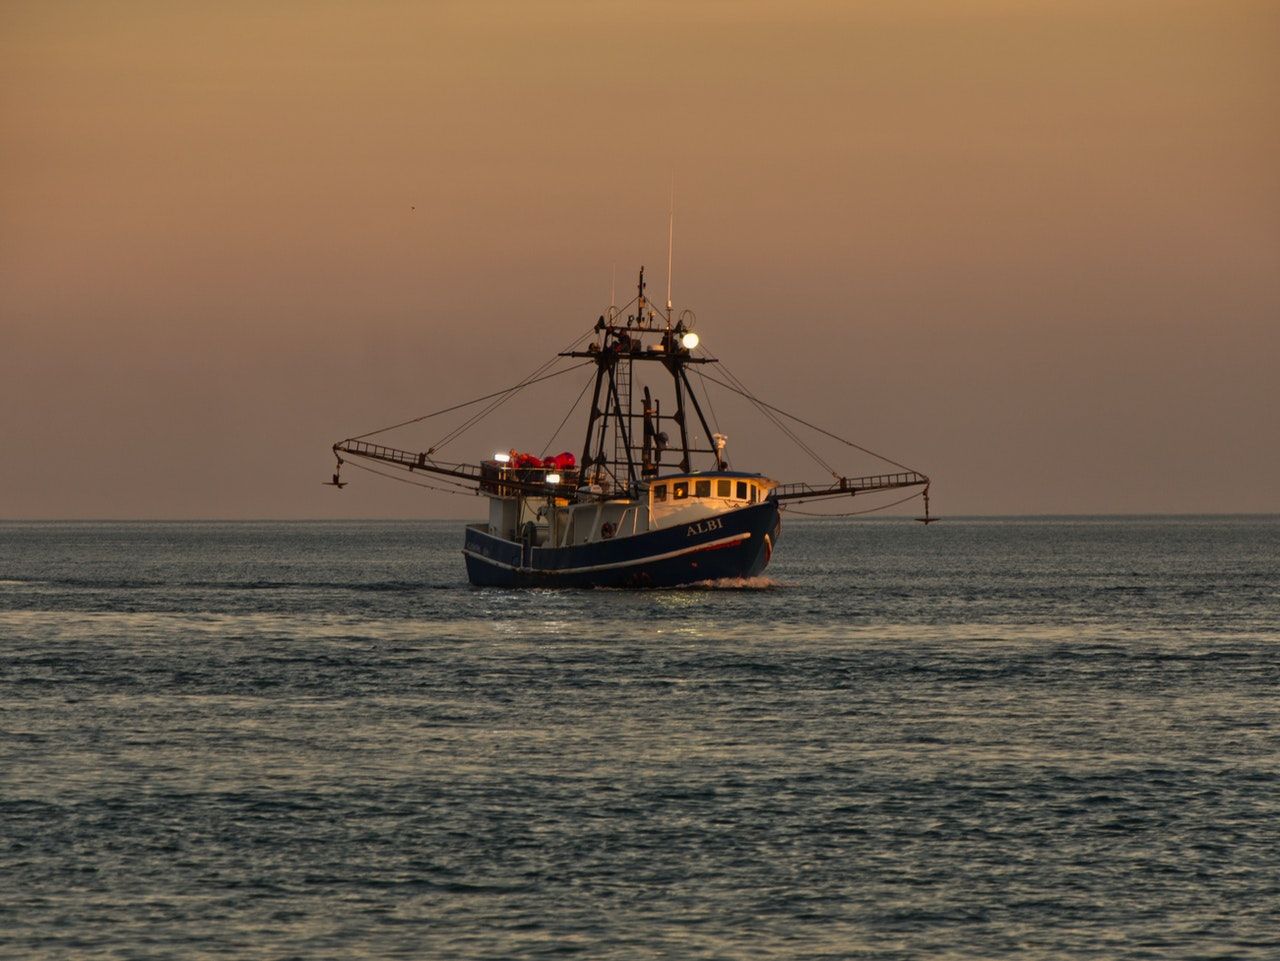 Fishing vessel at dusk